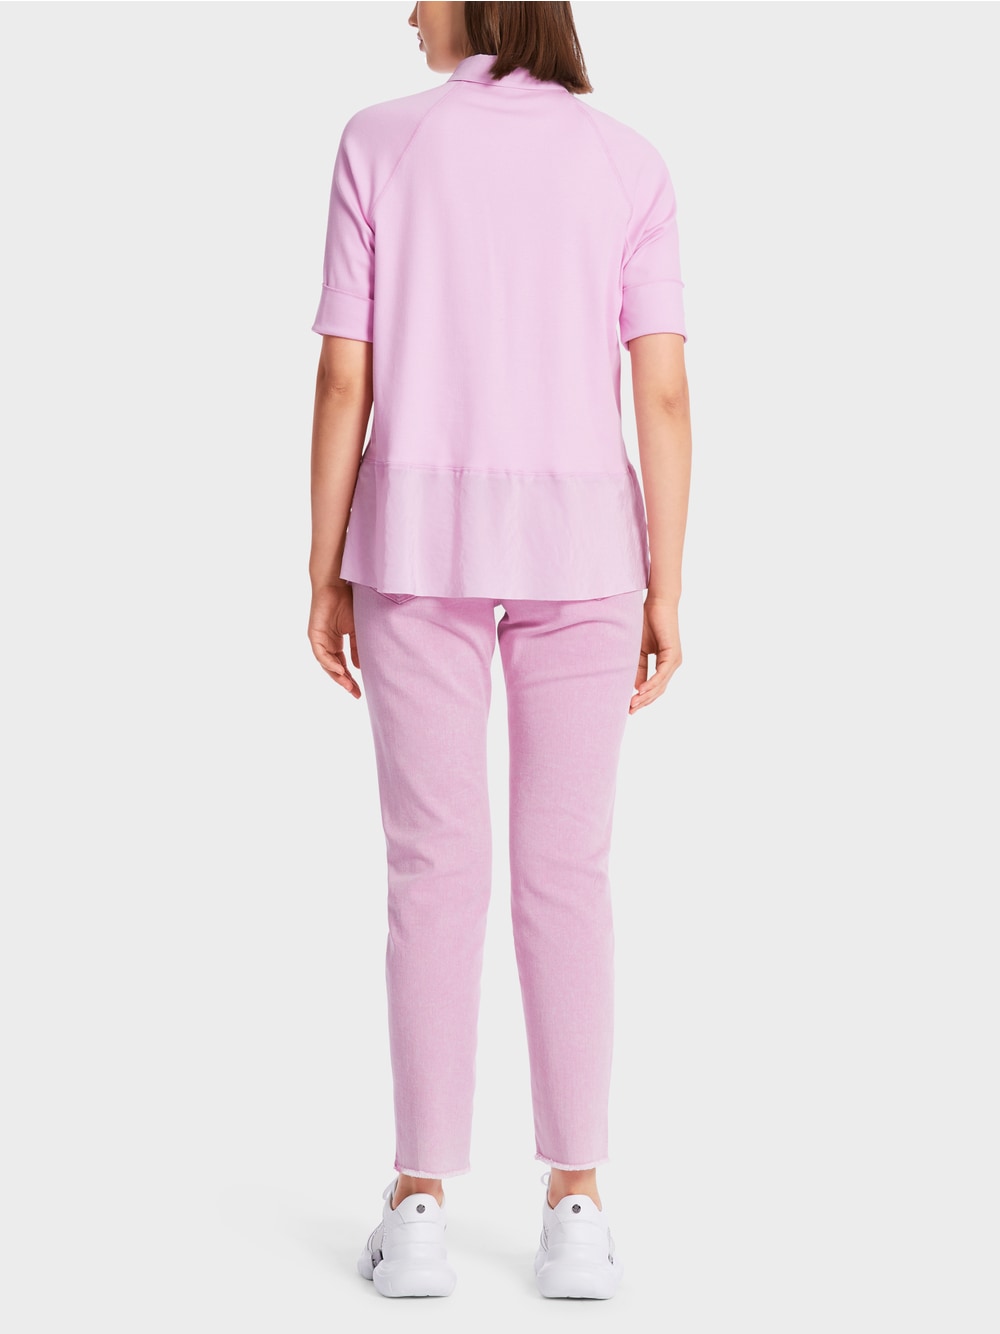 pink lavender polo shirt